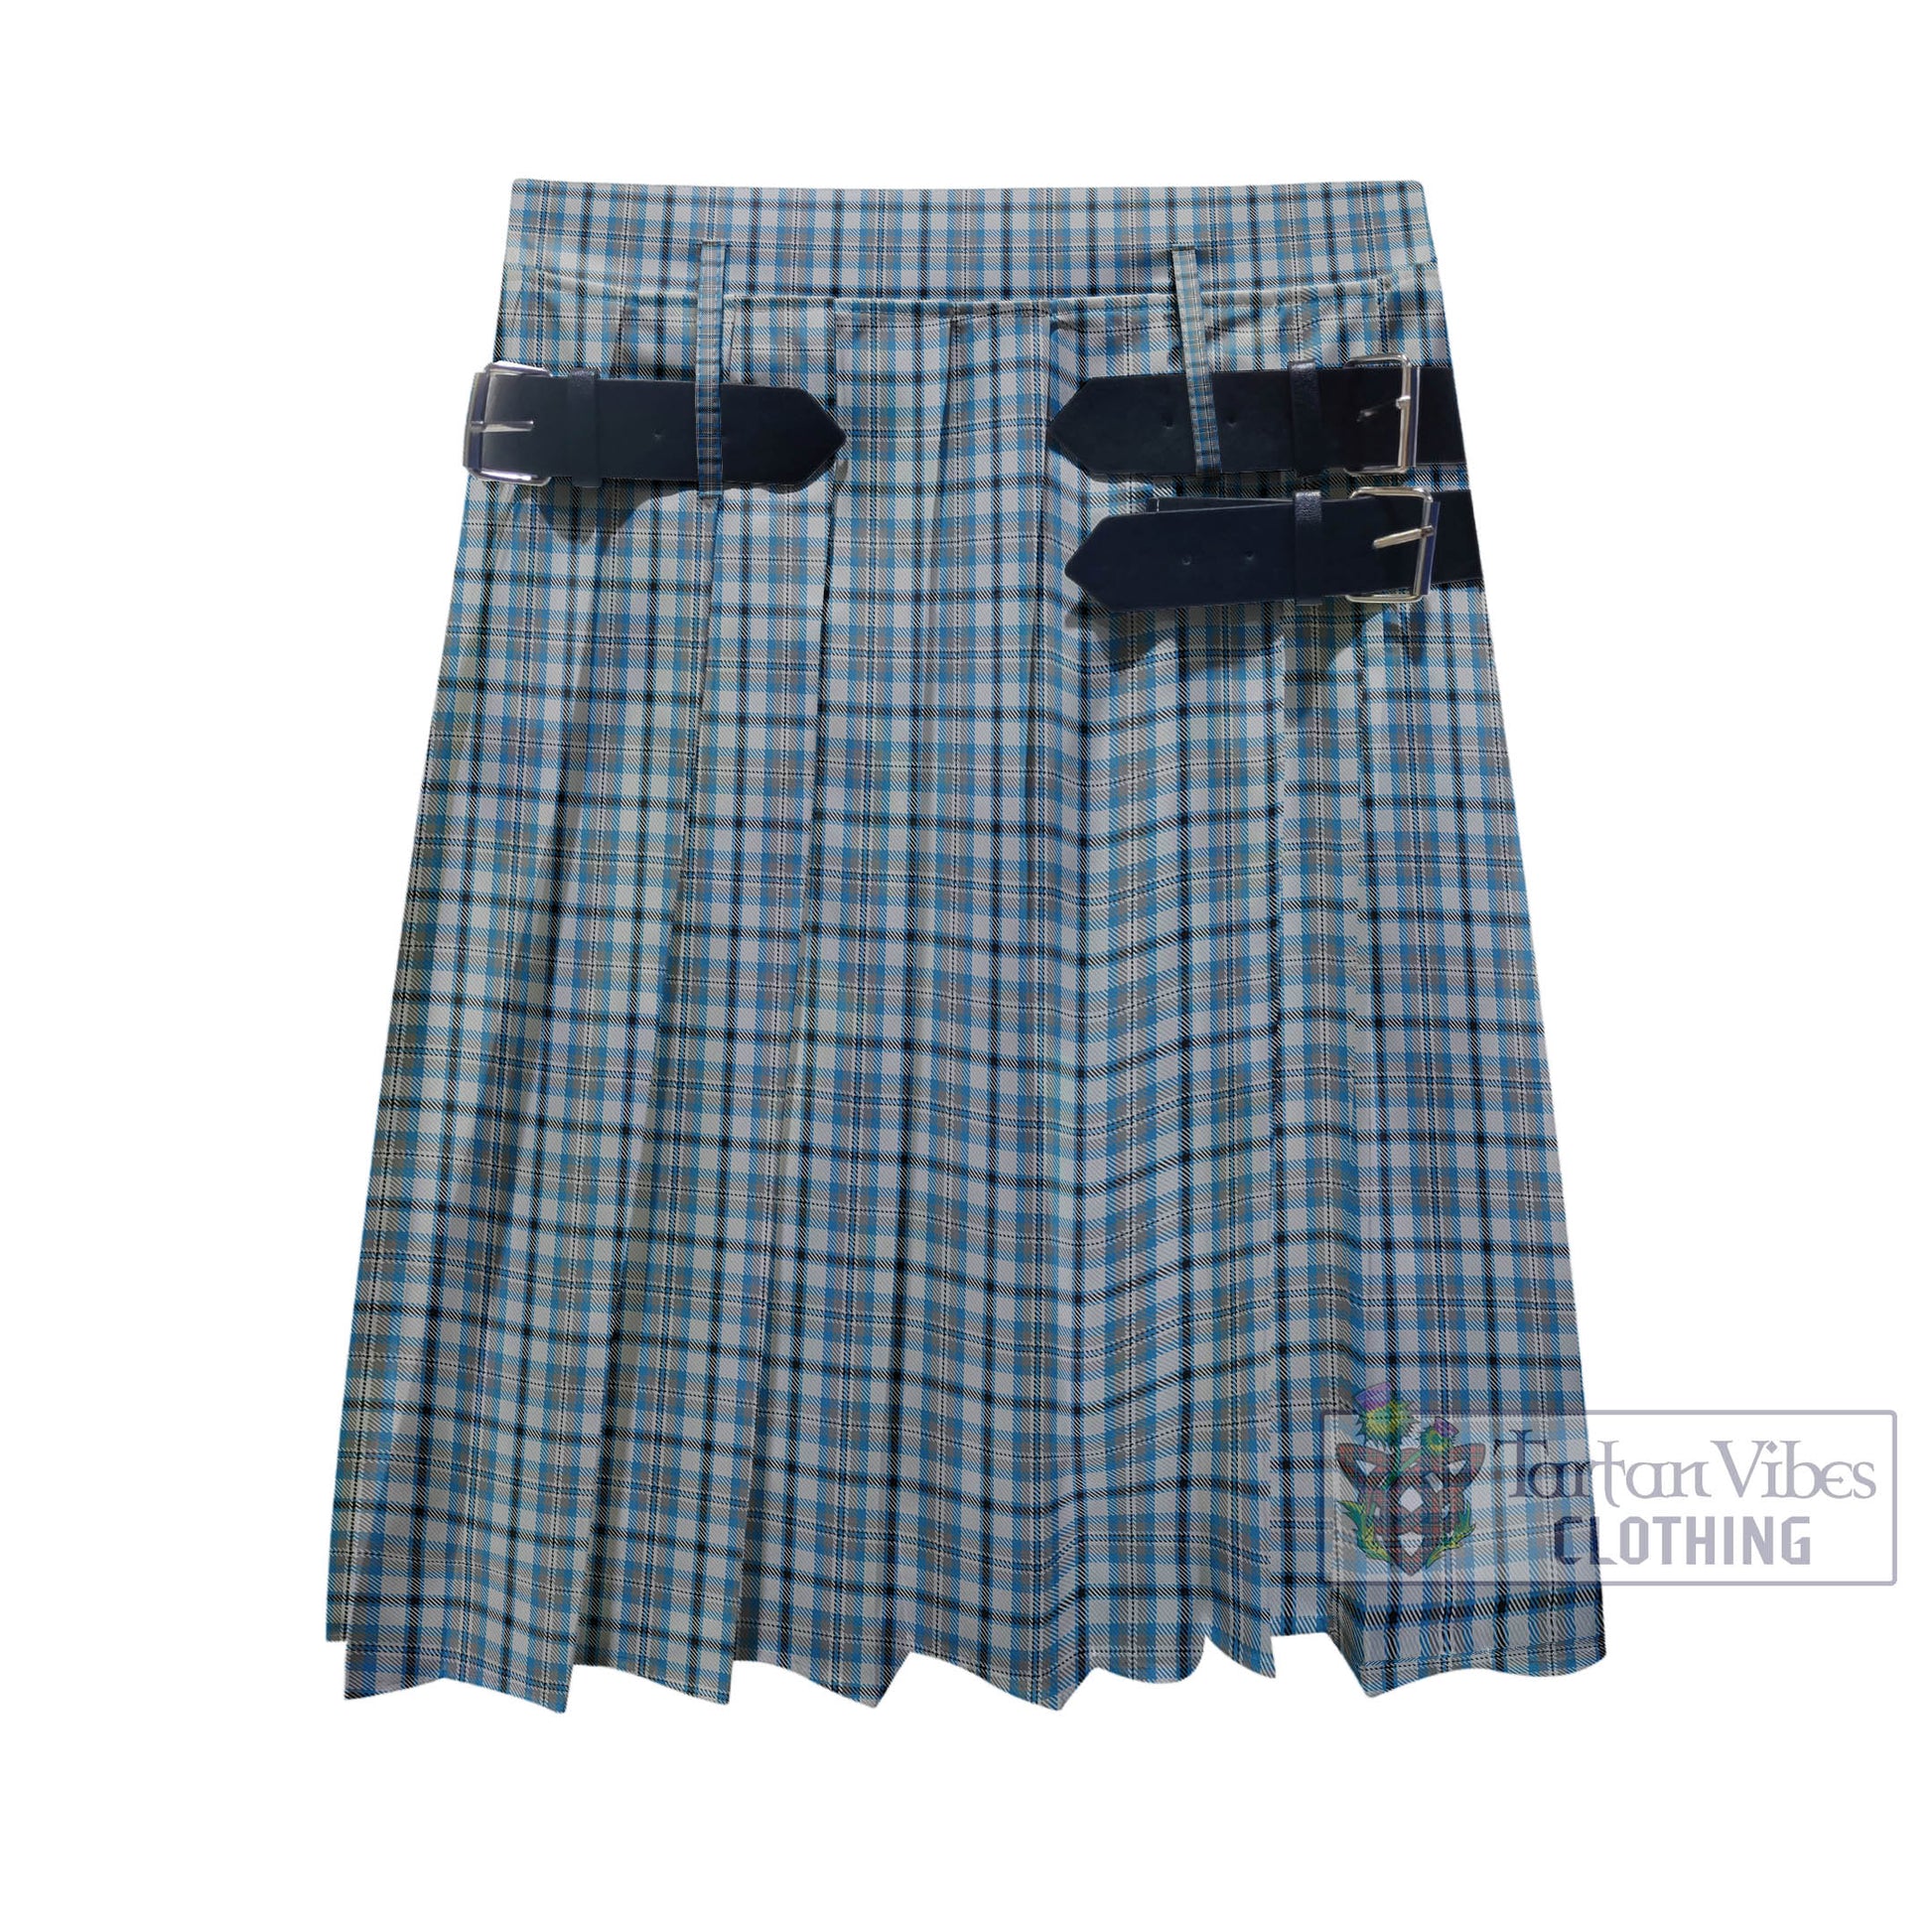 Tartan Vibes Clothing Conquergood Tartan Men's Pleated Skirt - Fashion Casual Retro Scottish Style